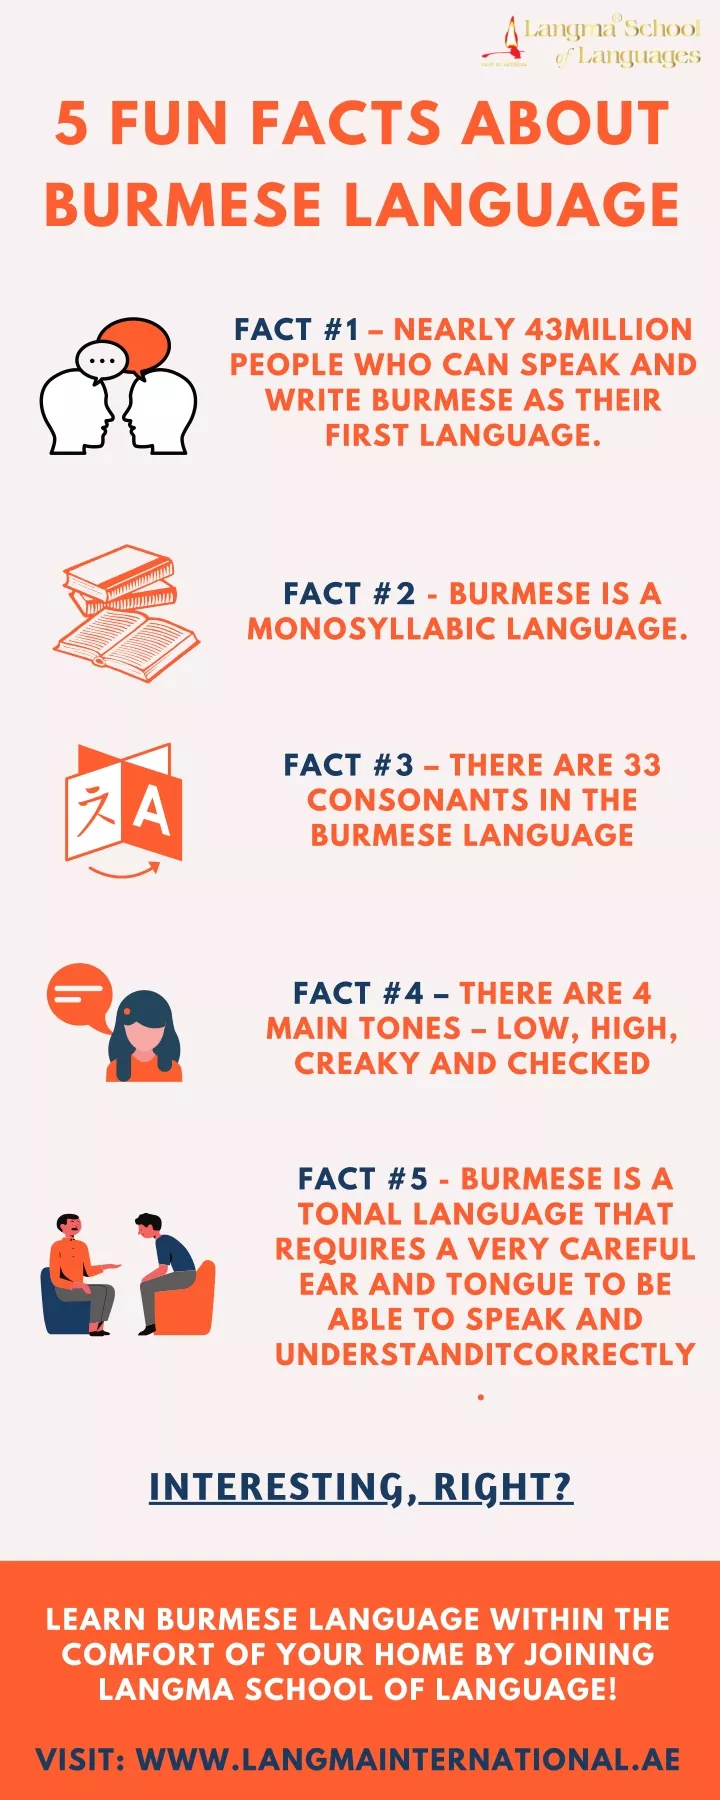 5 fun facts about burmese language